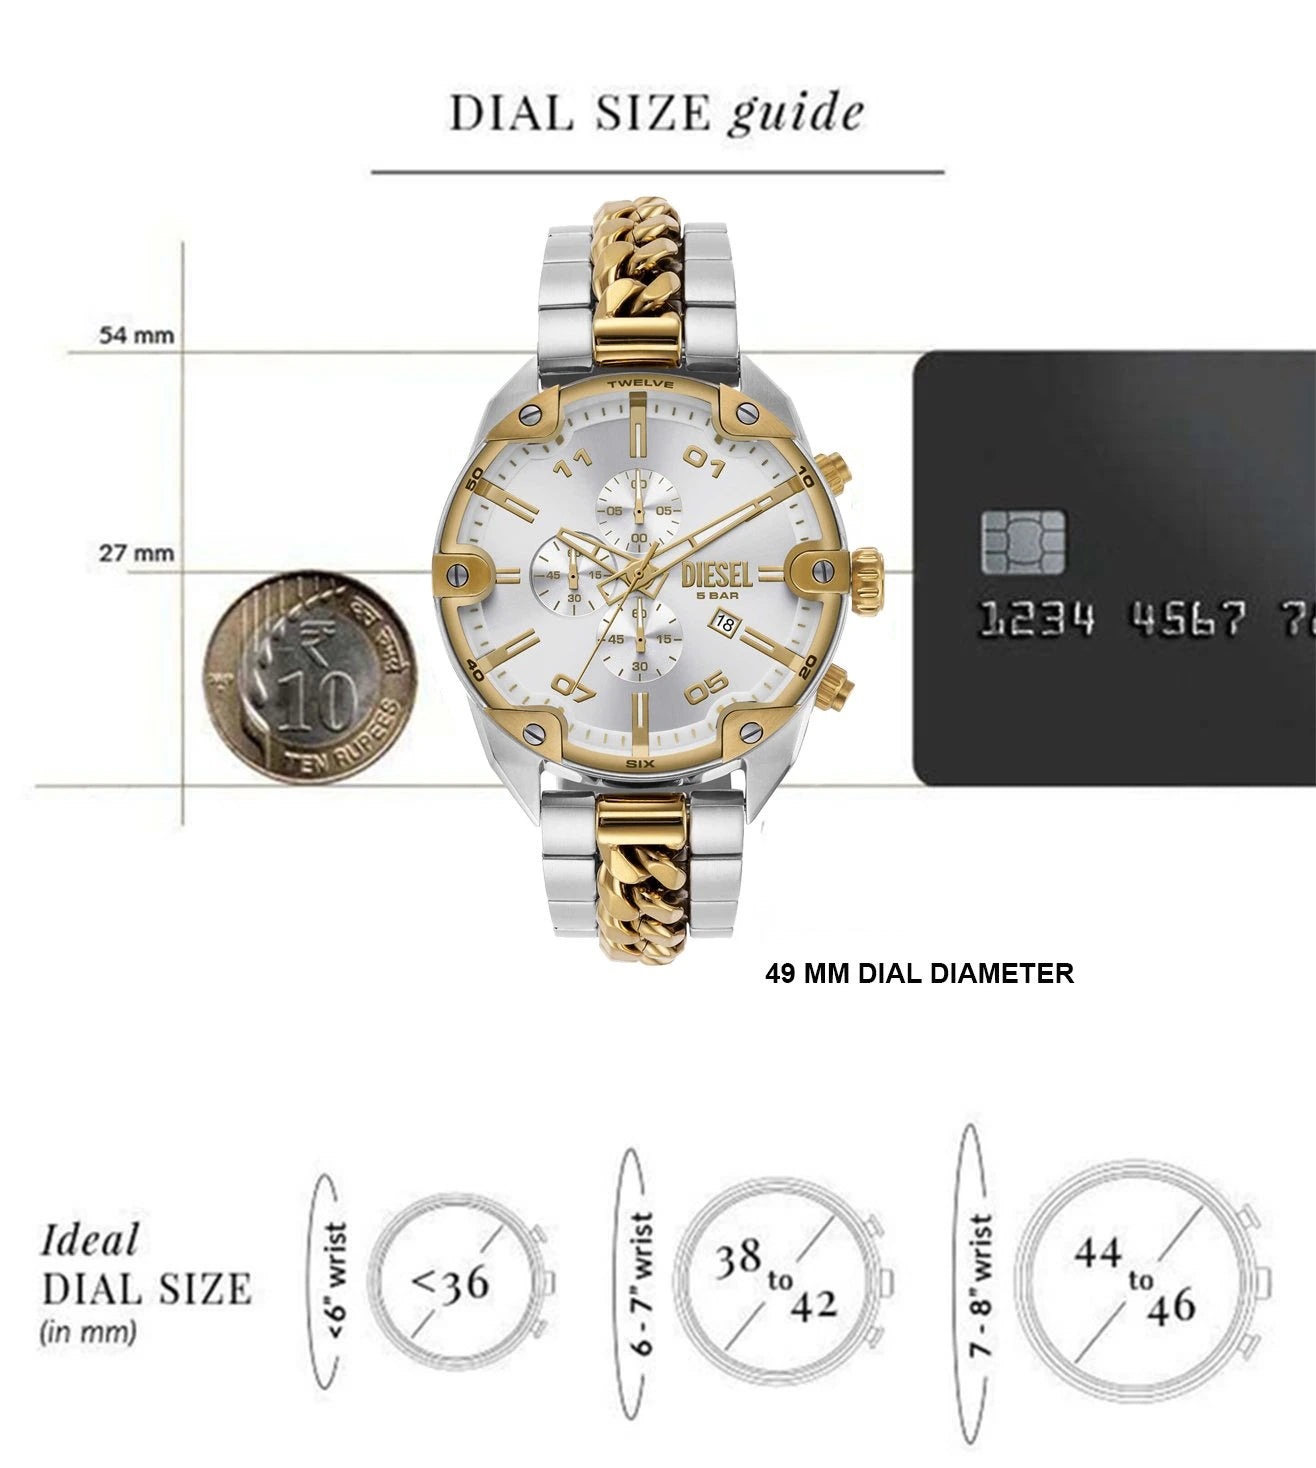 DZ4629 | DIESEL Spiked Chronograph Watch for Men